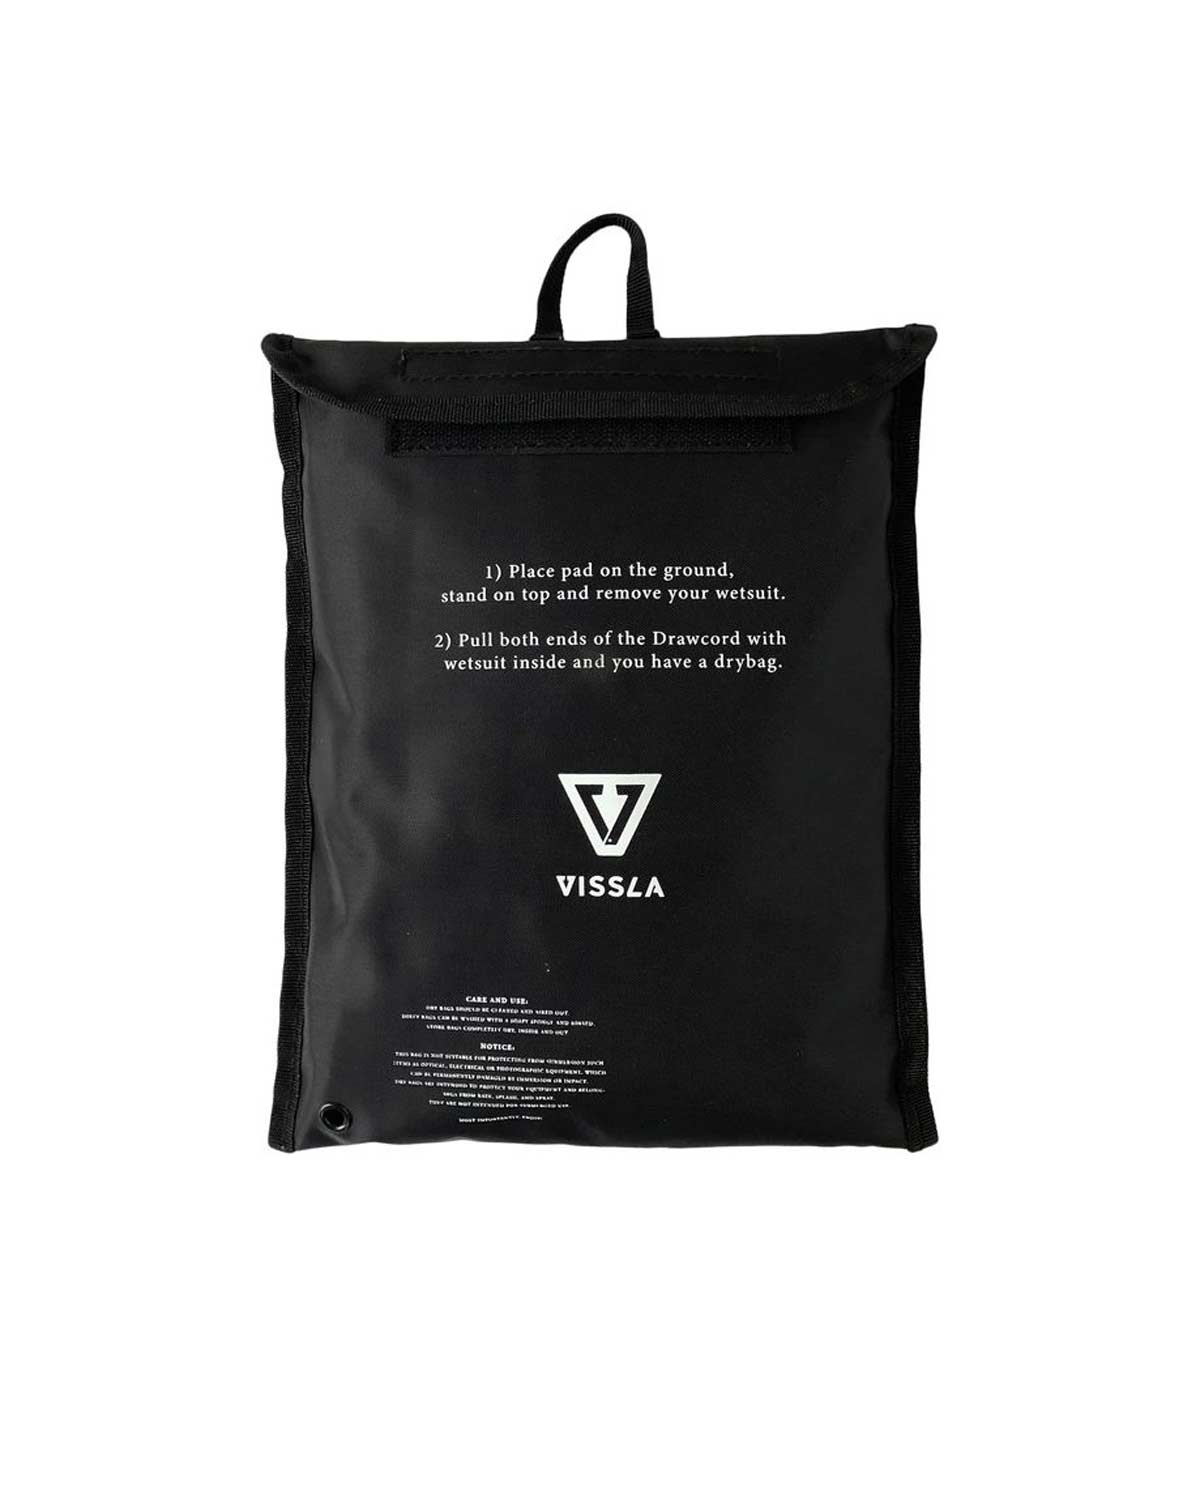 Vissla Portable Changing Pad & Bag